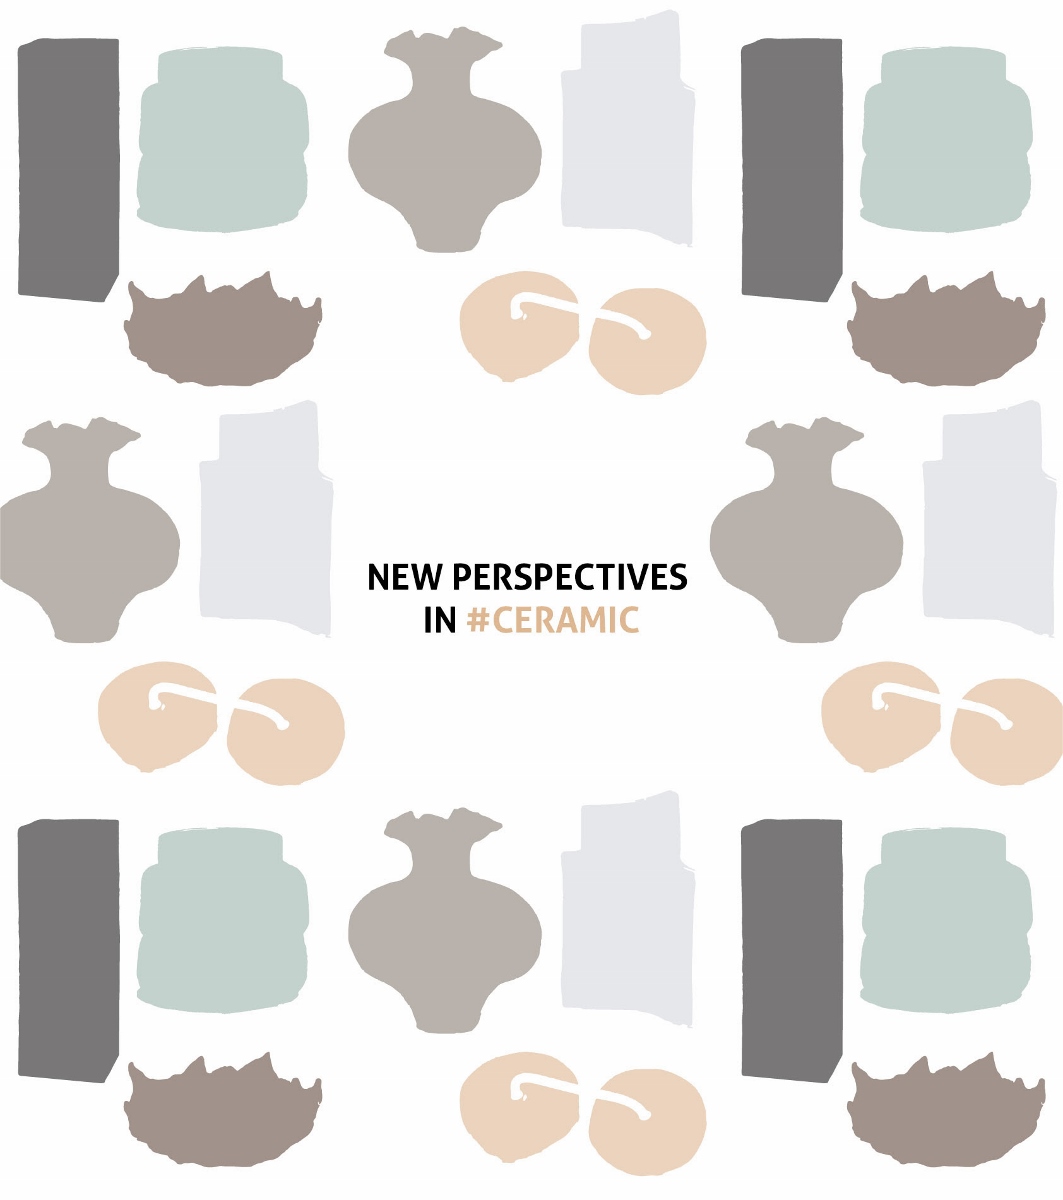 New perspectives in #ceramics